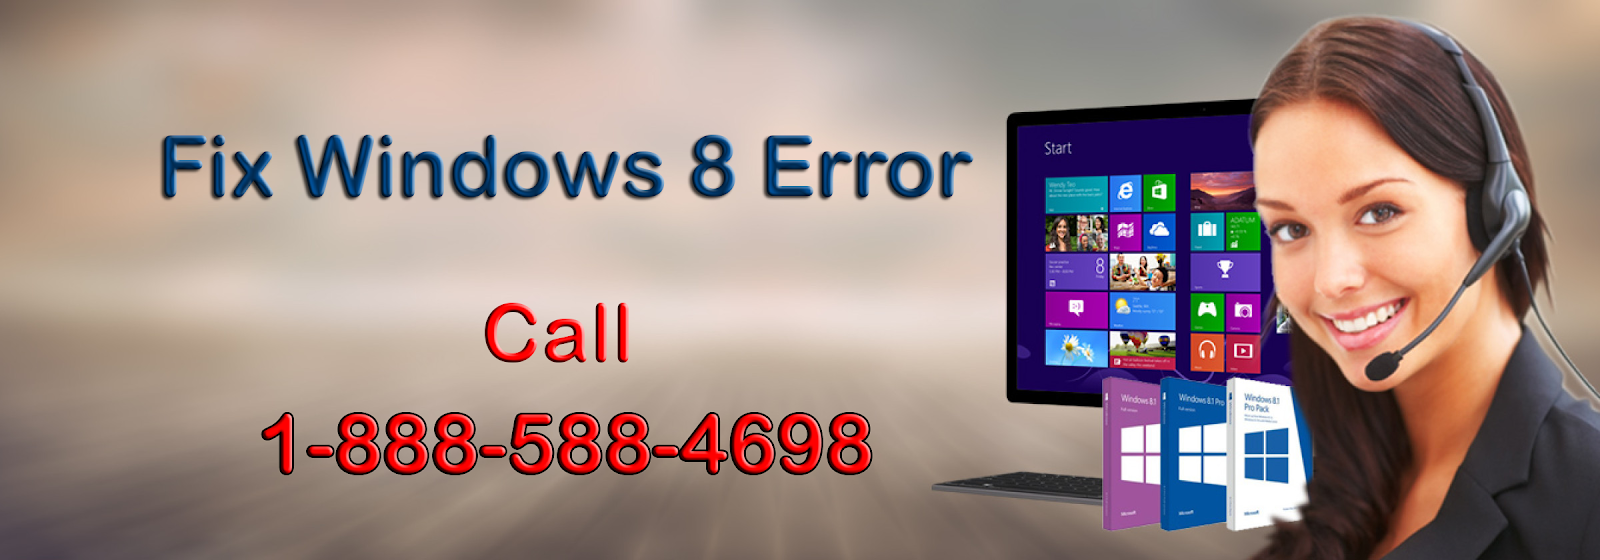 Fix Windows 8 Error